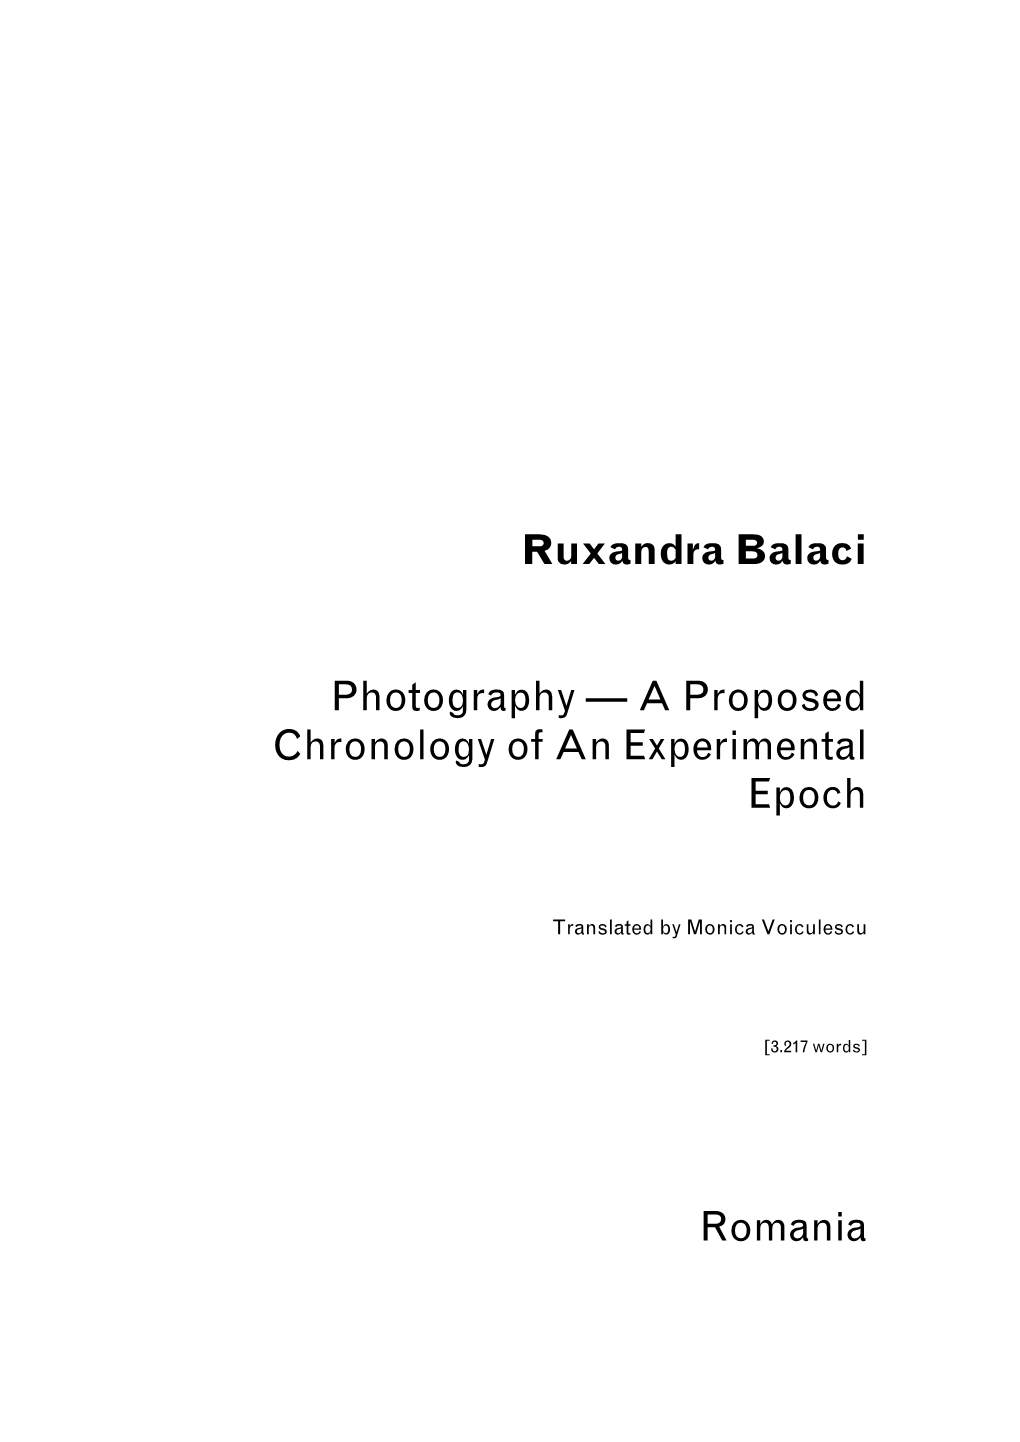 Ruxandra Balaci Photography / a Proposed Chronology / Romania